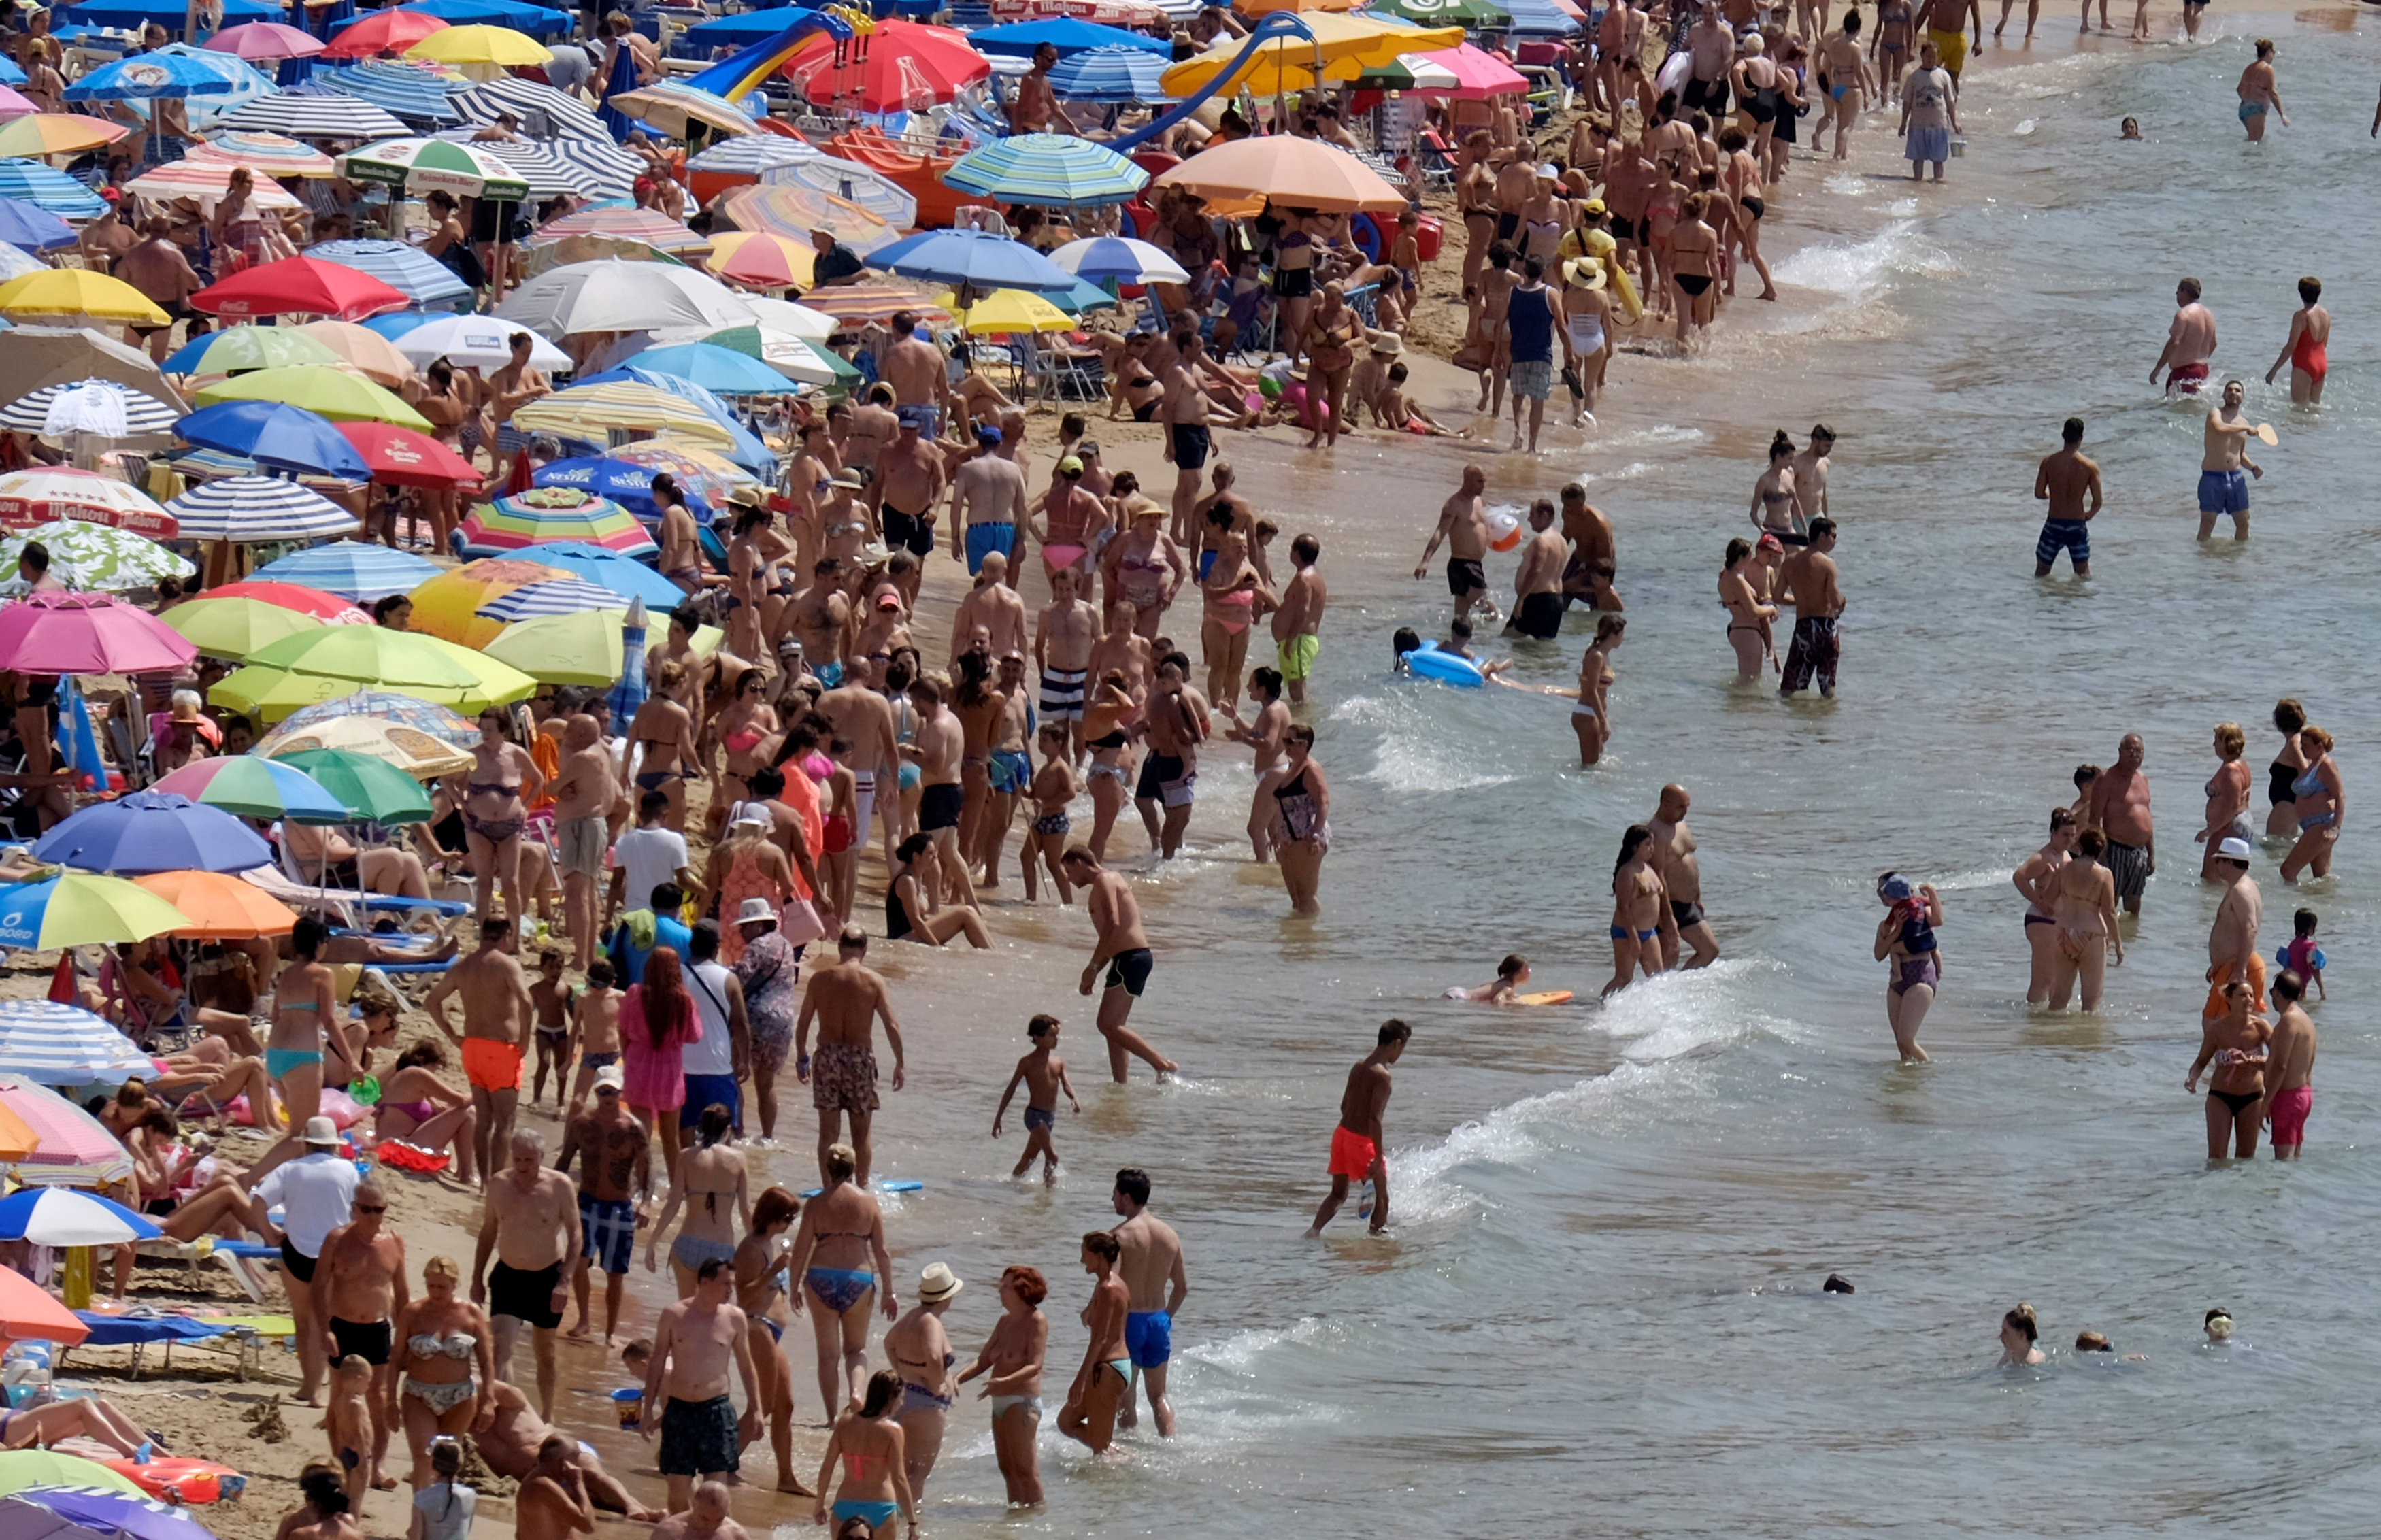 People enjoy the beach in the southeastern city of Benidorm